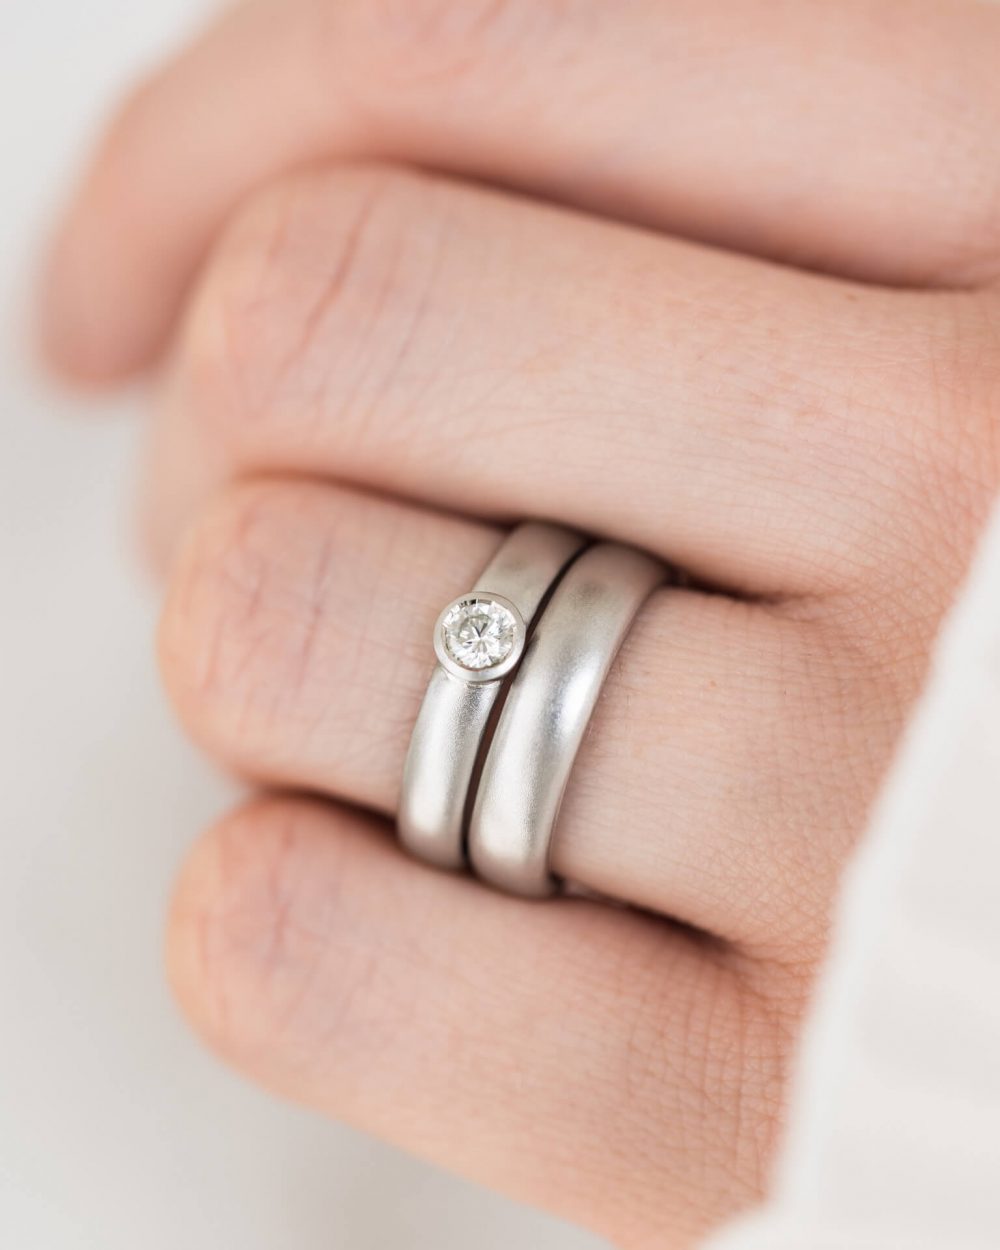 Diamond Engagement Ring With Wedding Band Jacks Turner Bristol